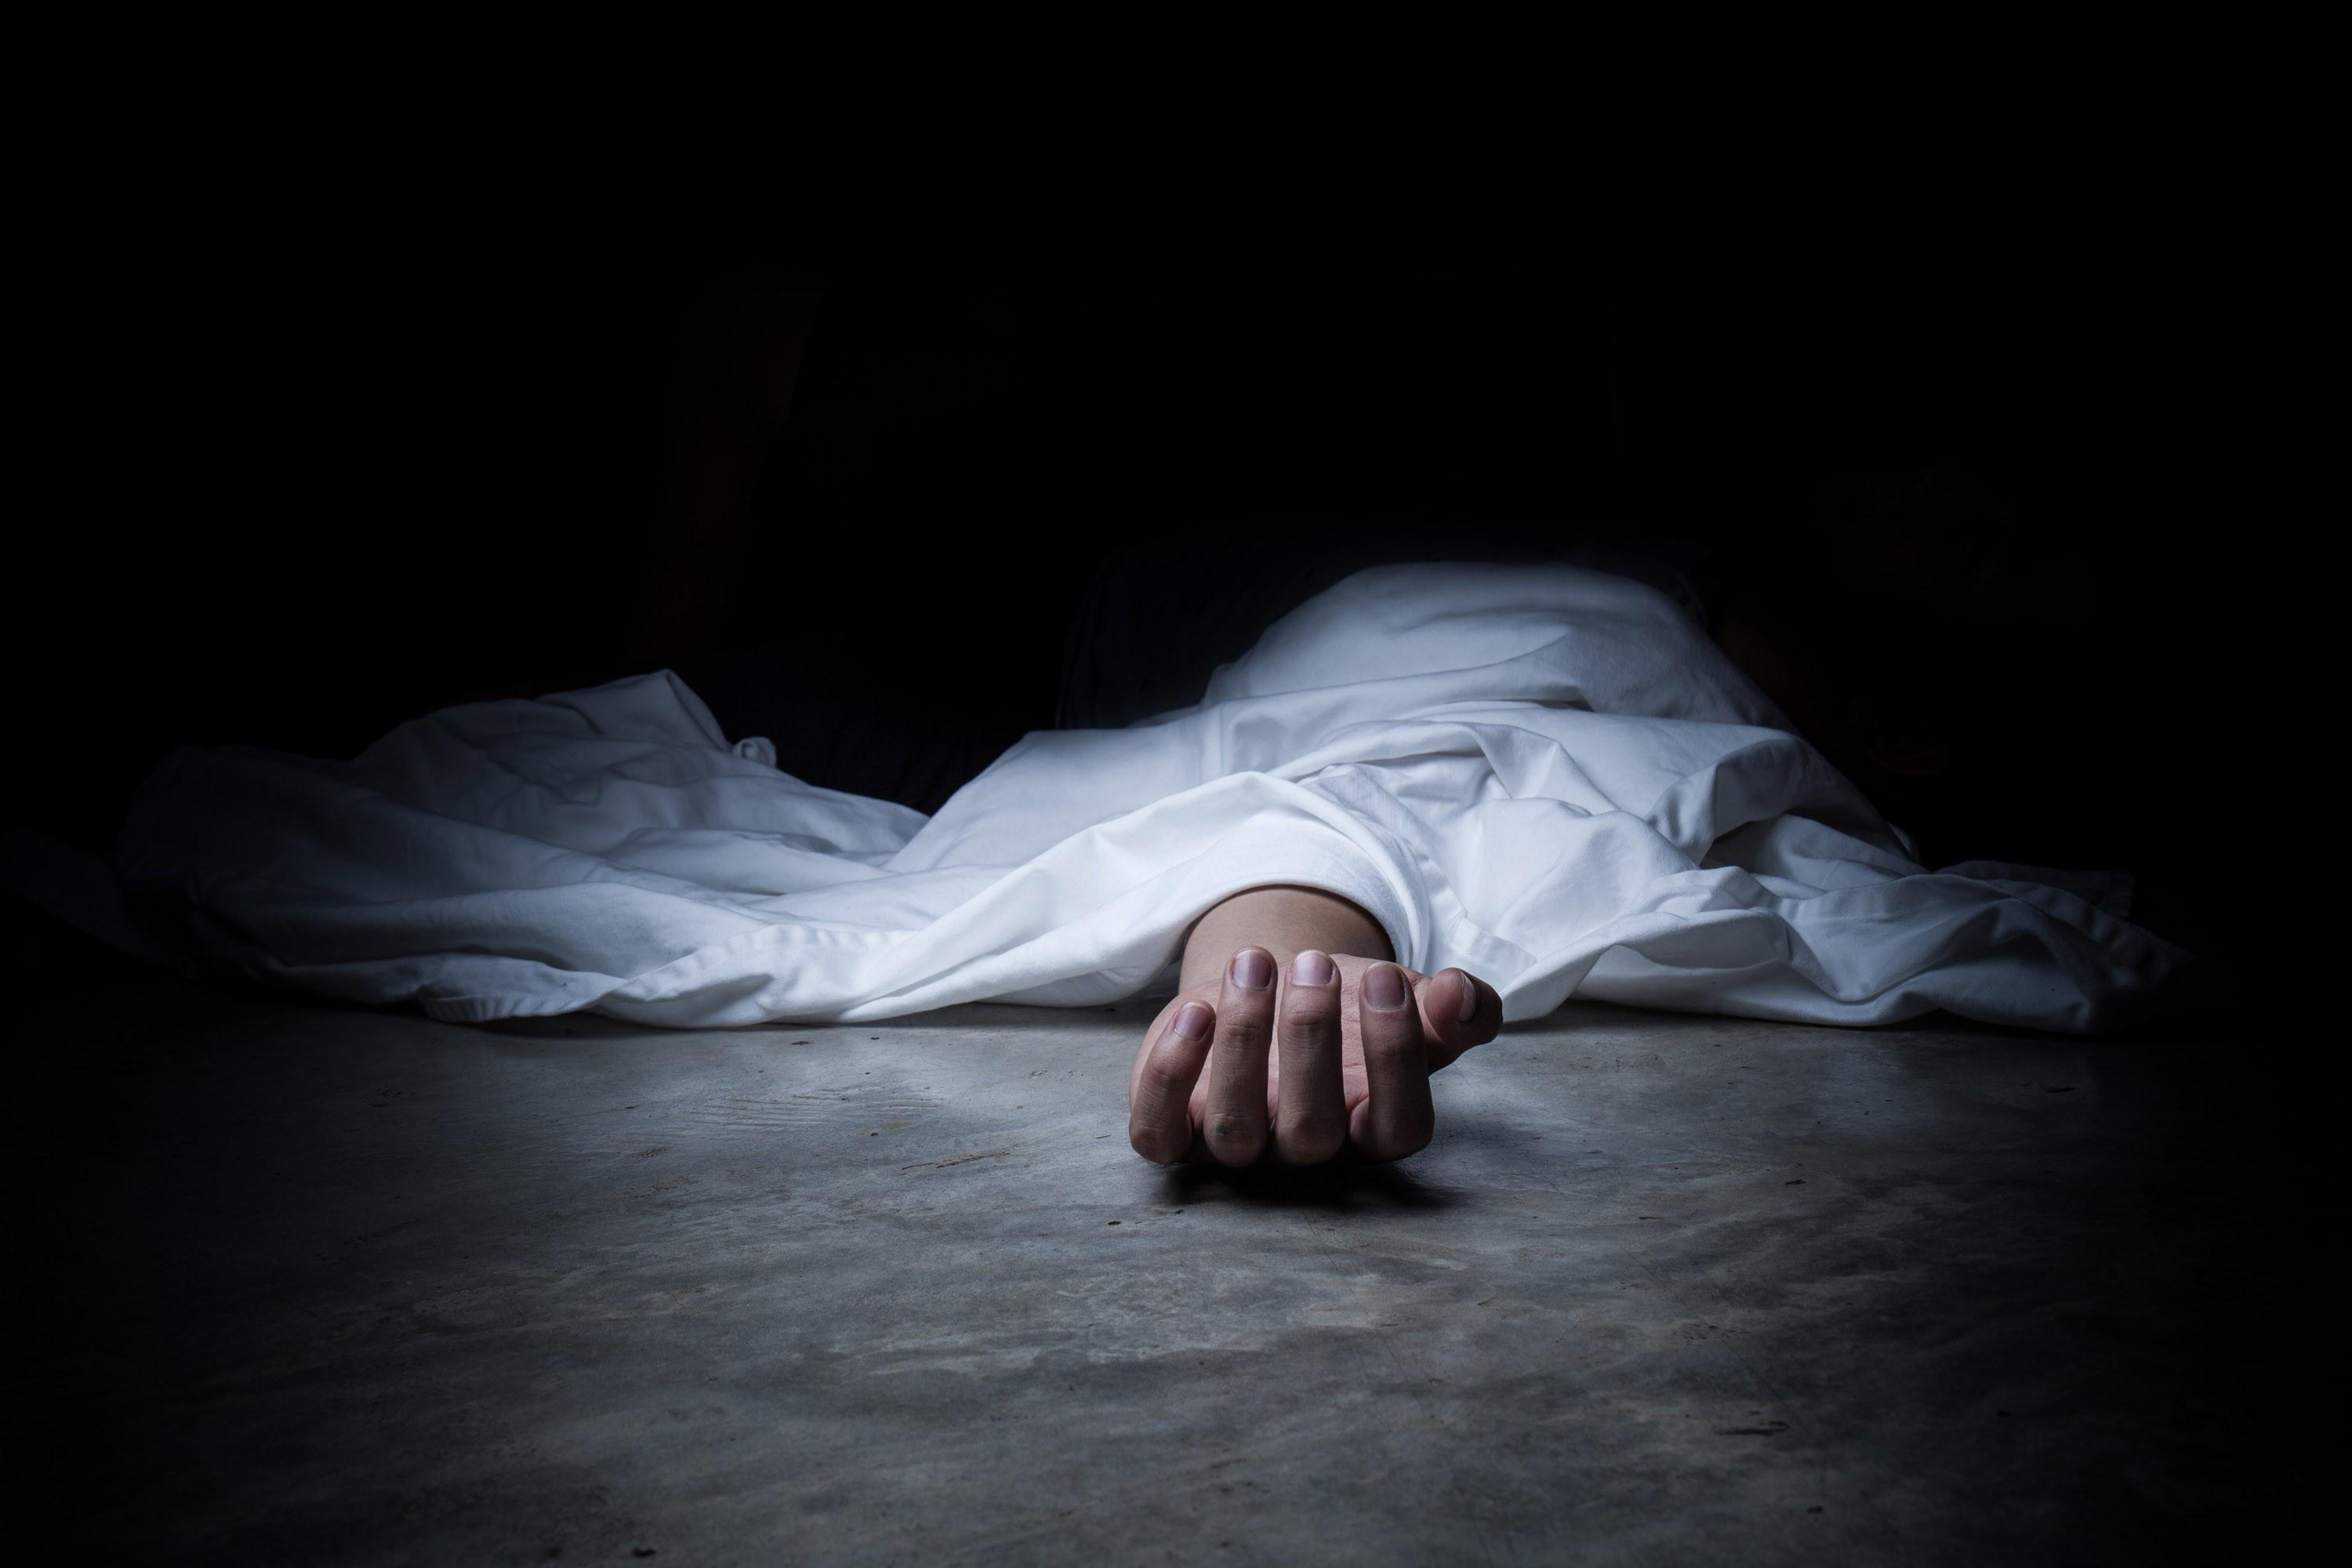 Man found dead in prestatyn